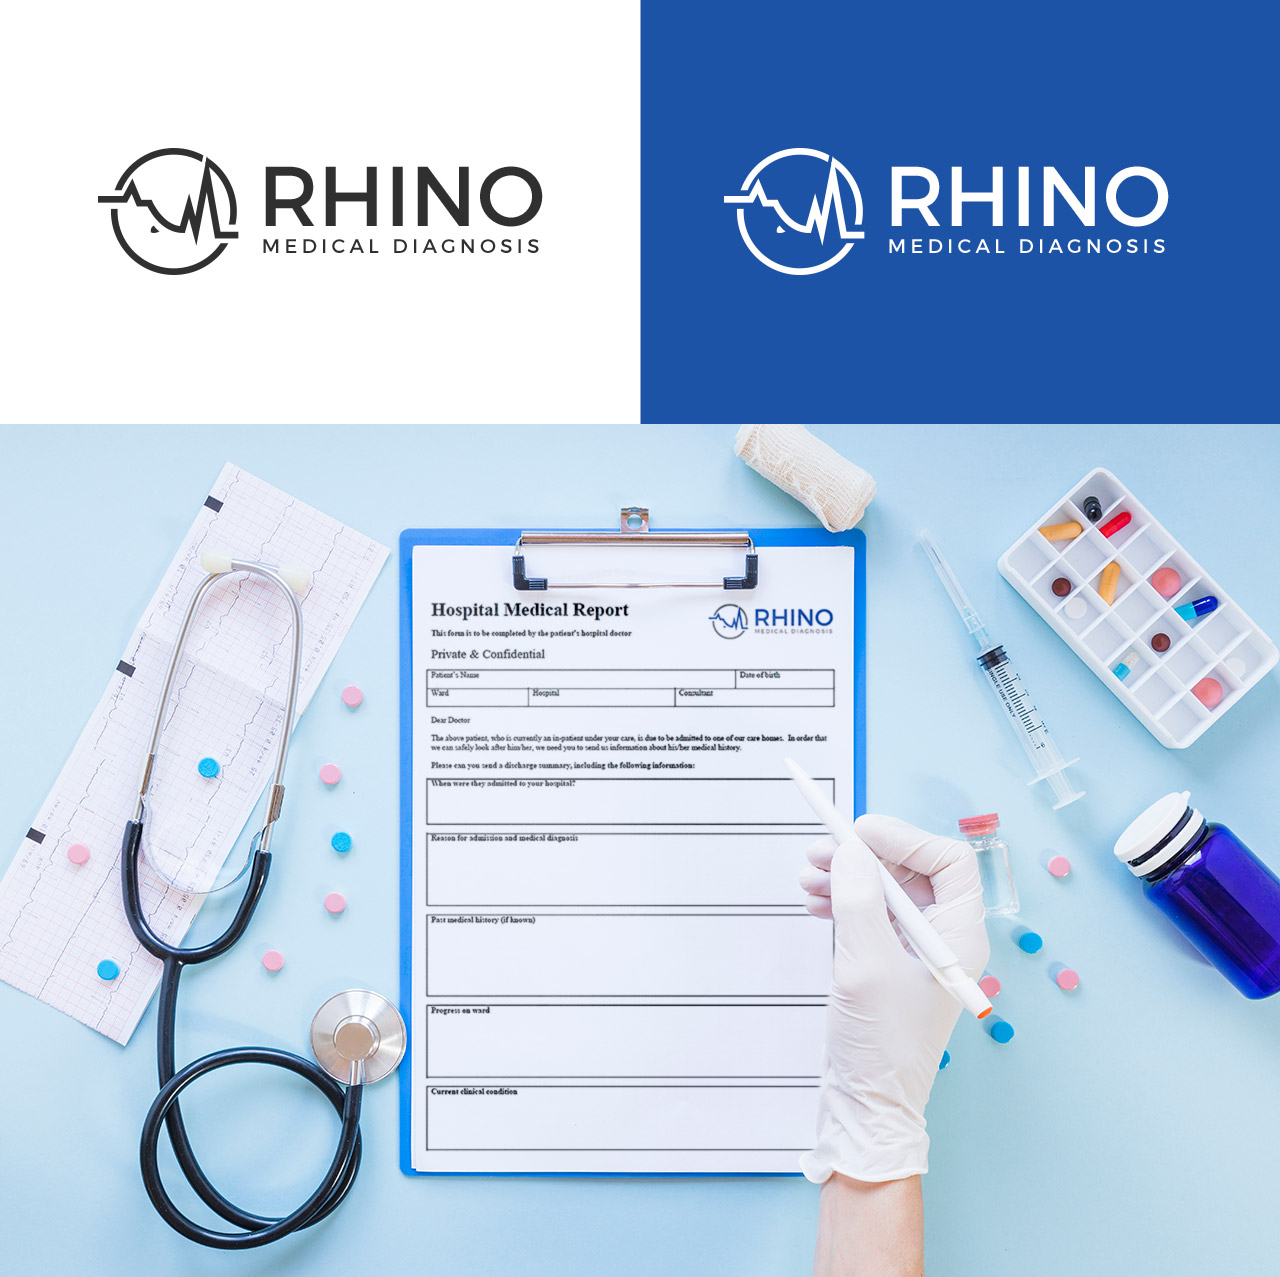 rhino-diagnosis-preview.jpg